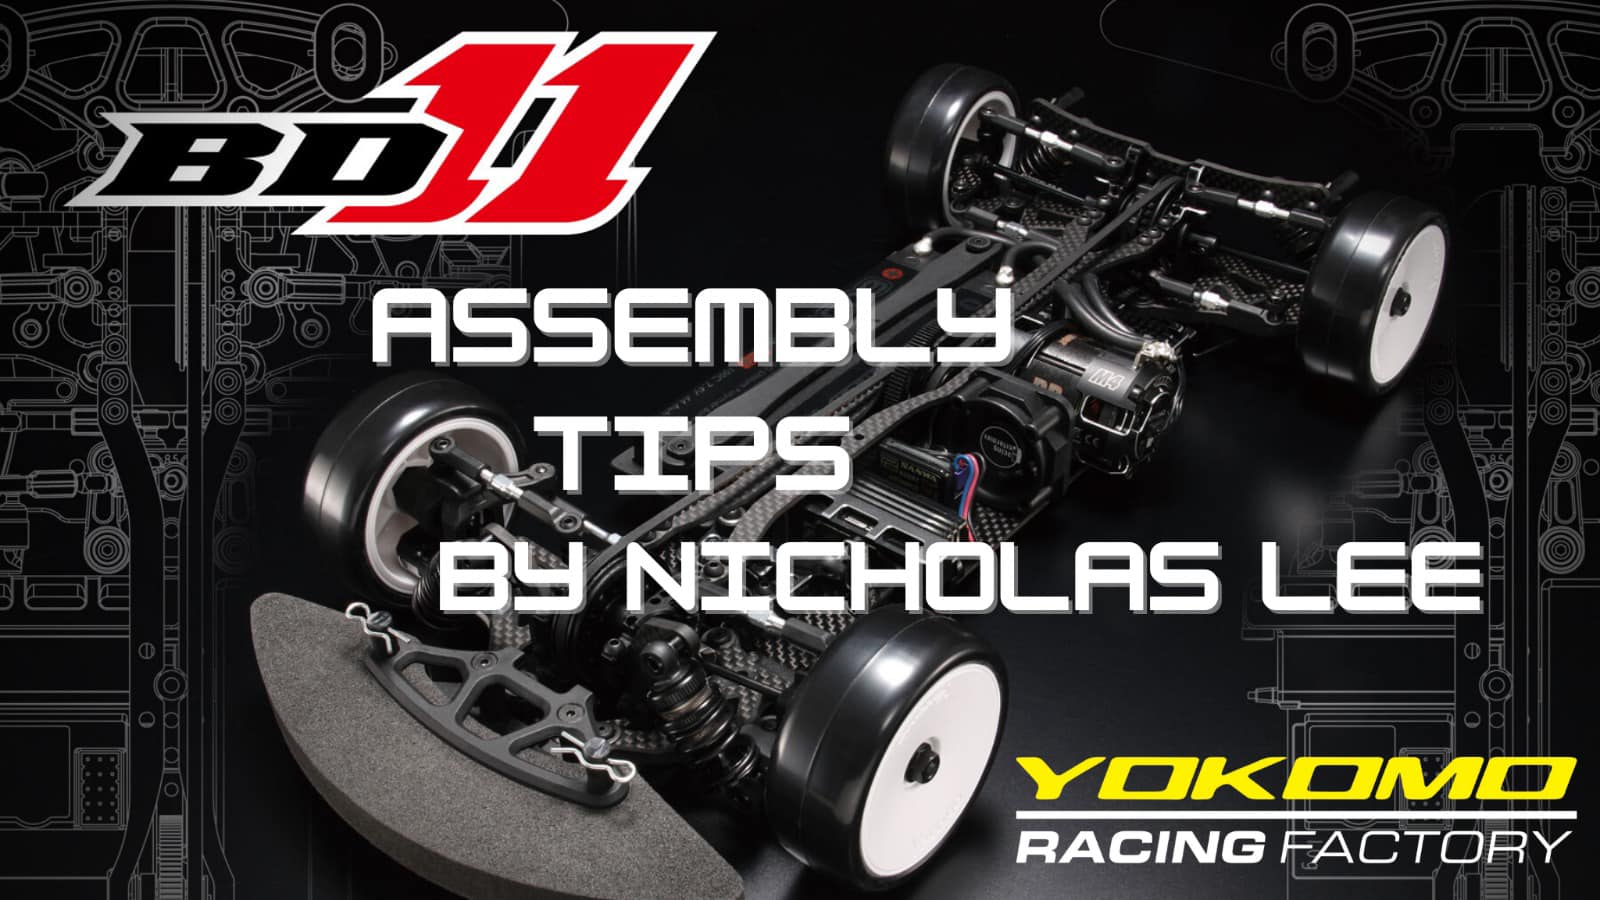 Yokomo BD11 Assembly Tips